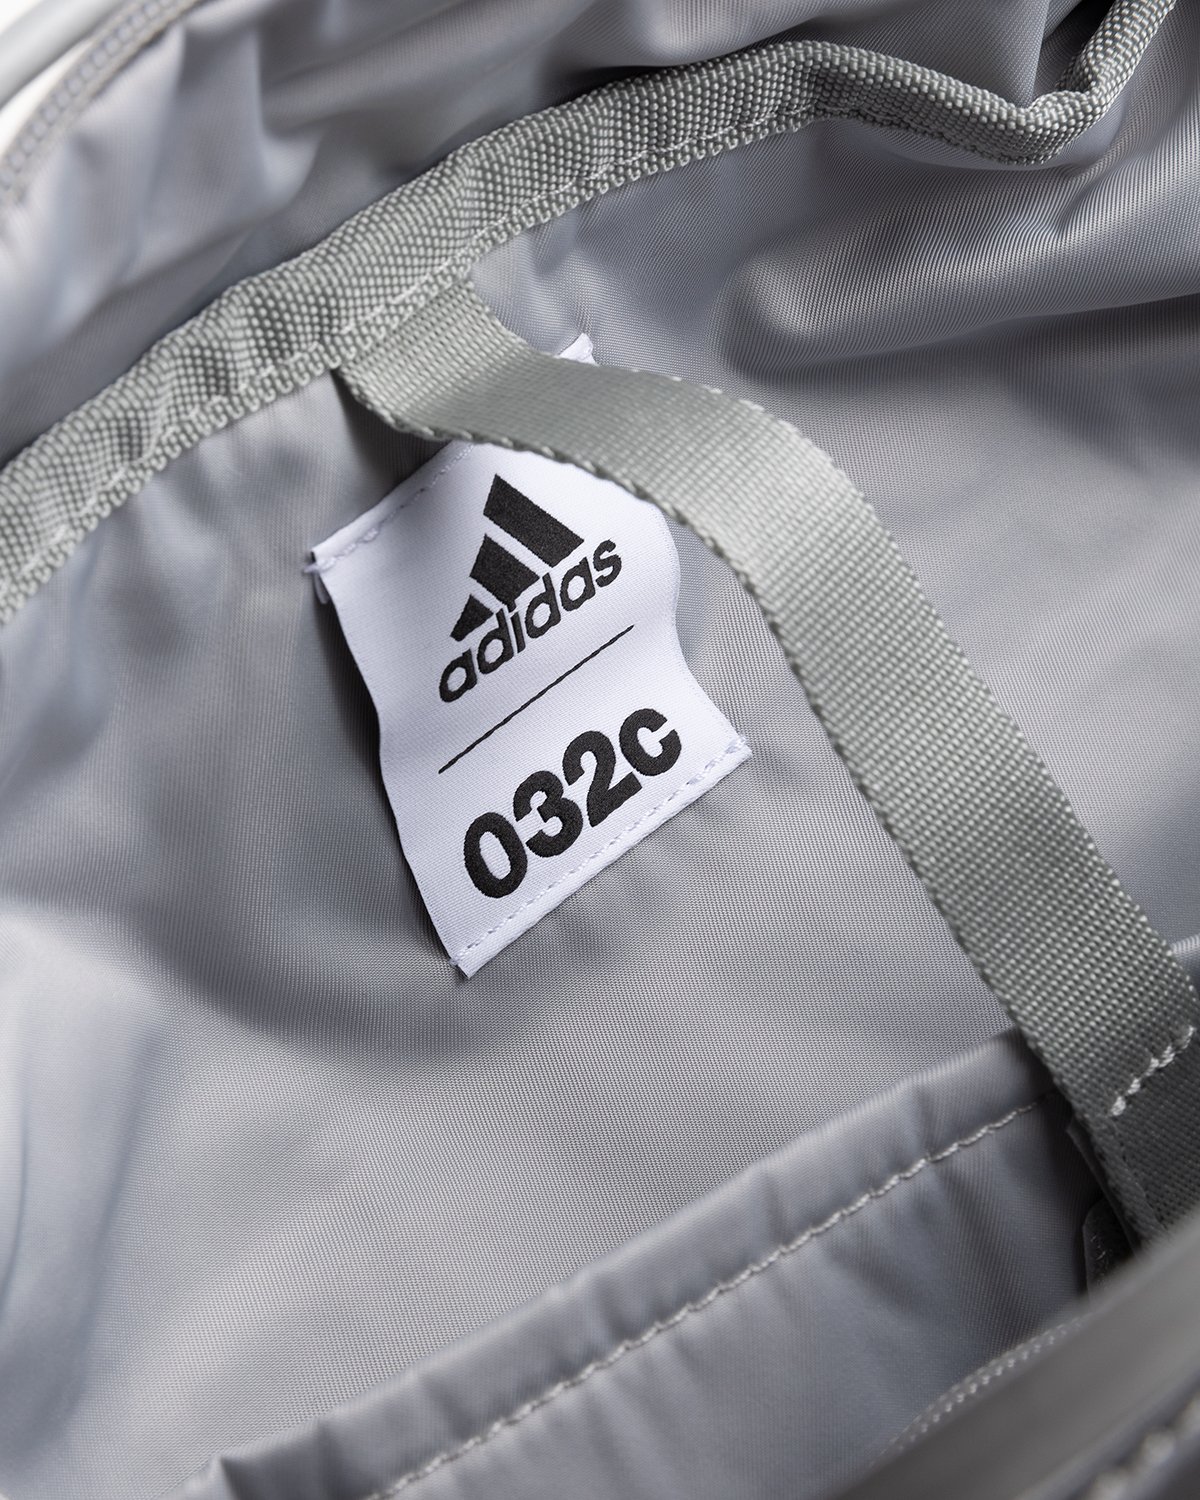 Adidas x 032c - Tote Greone - Accessories - White - Image 3